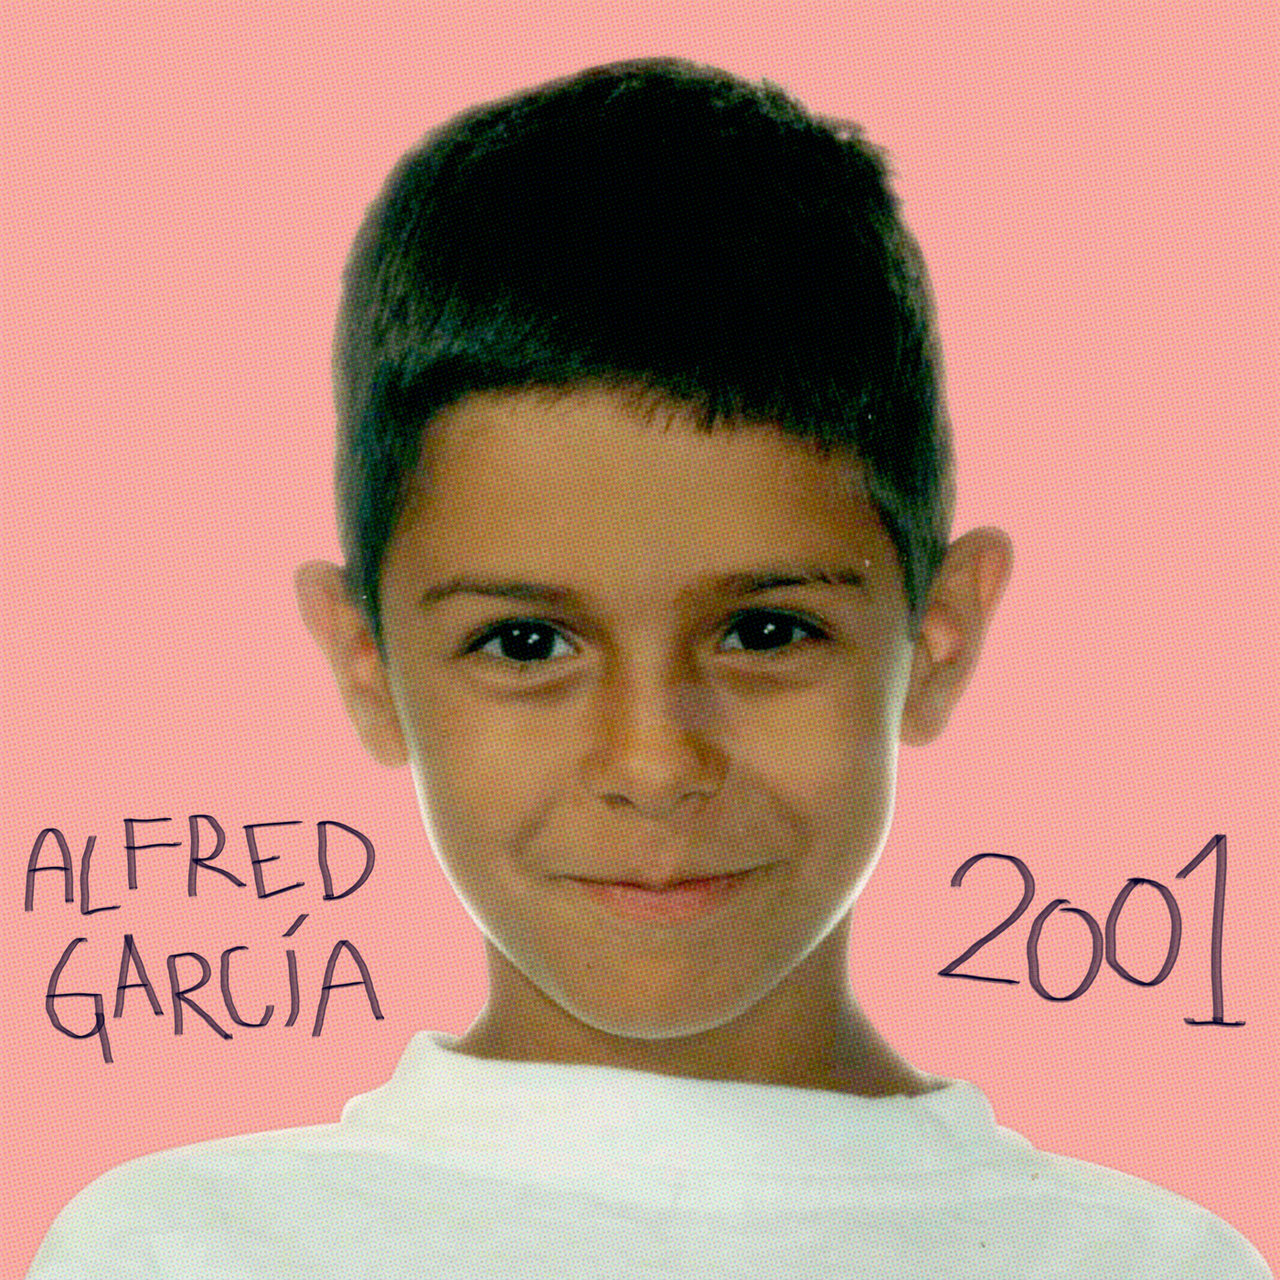 Alfred García 2001 cover artwork